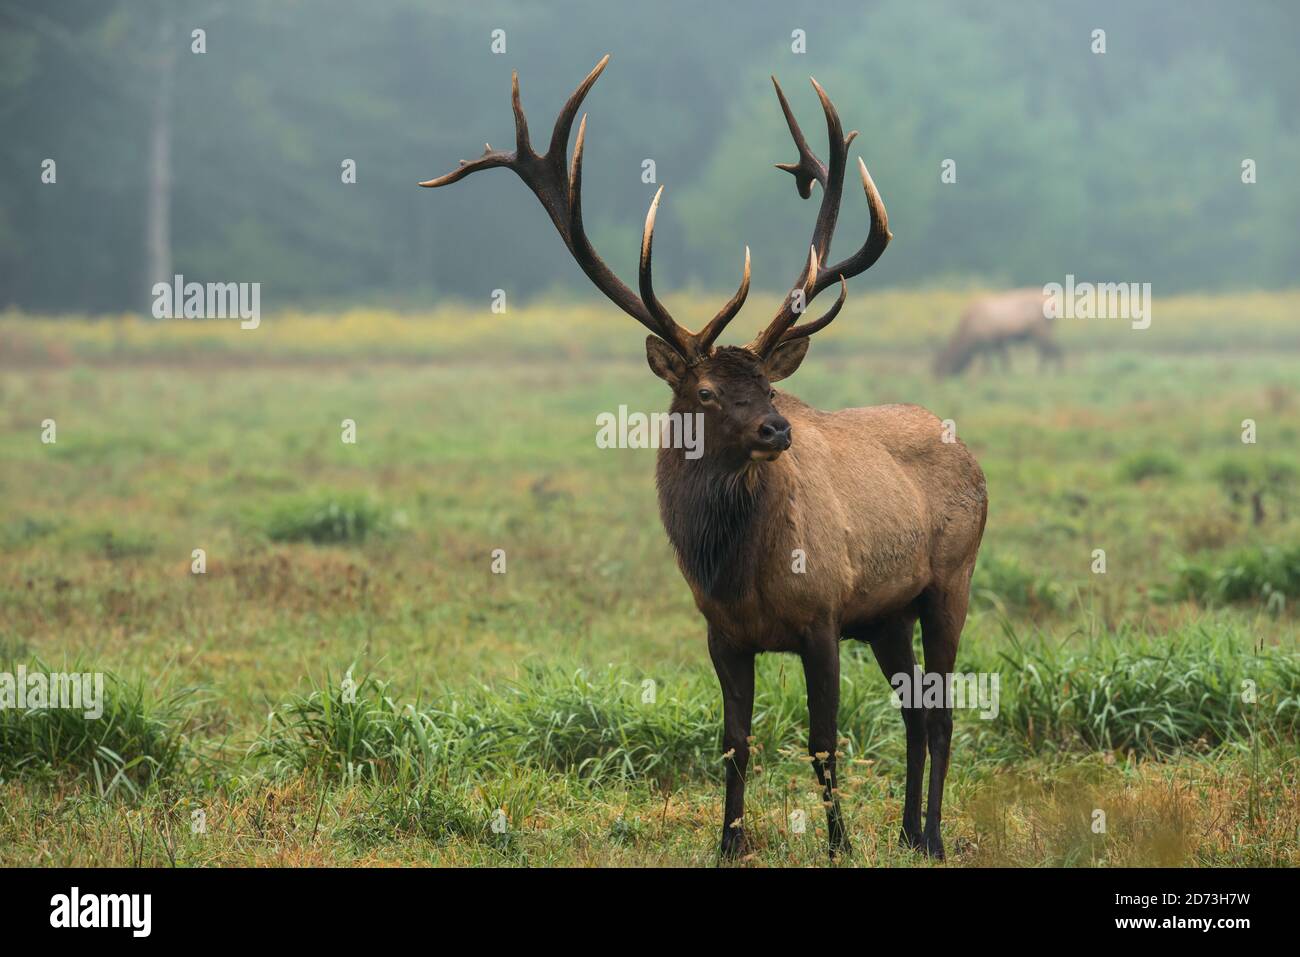 A bull elk facing the camera during the elk rut, Benzette, Pennsylvania, USA Stock Photo